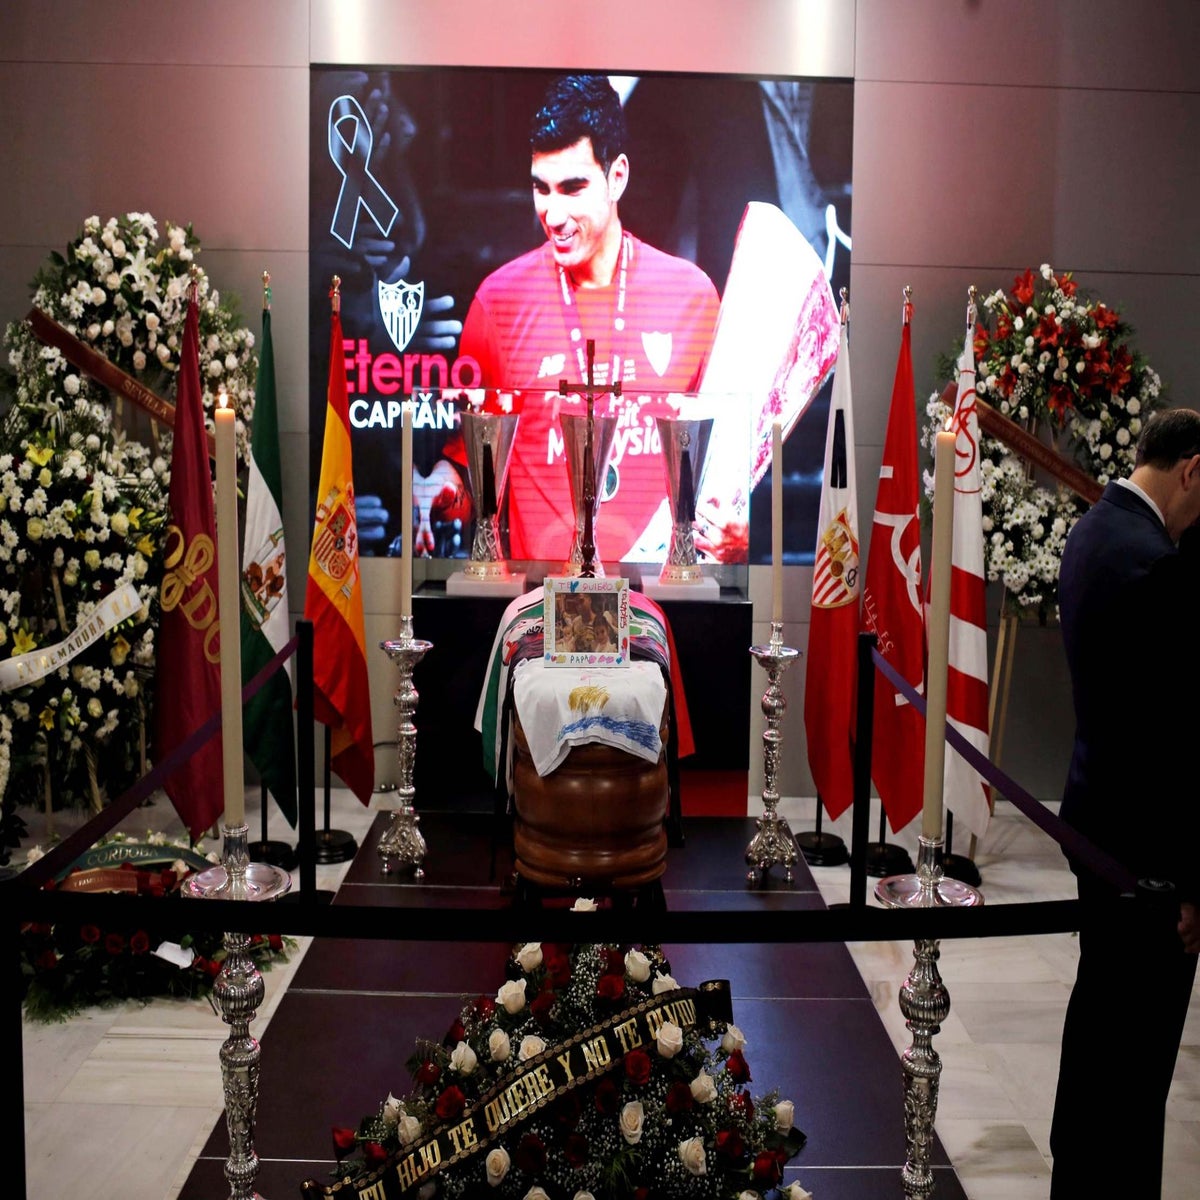 Jose Antonio Reyes' widow reveals final message from former Arsenal star  before tragic crash - Mirror Online